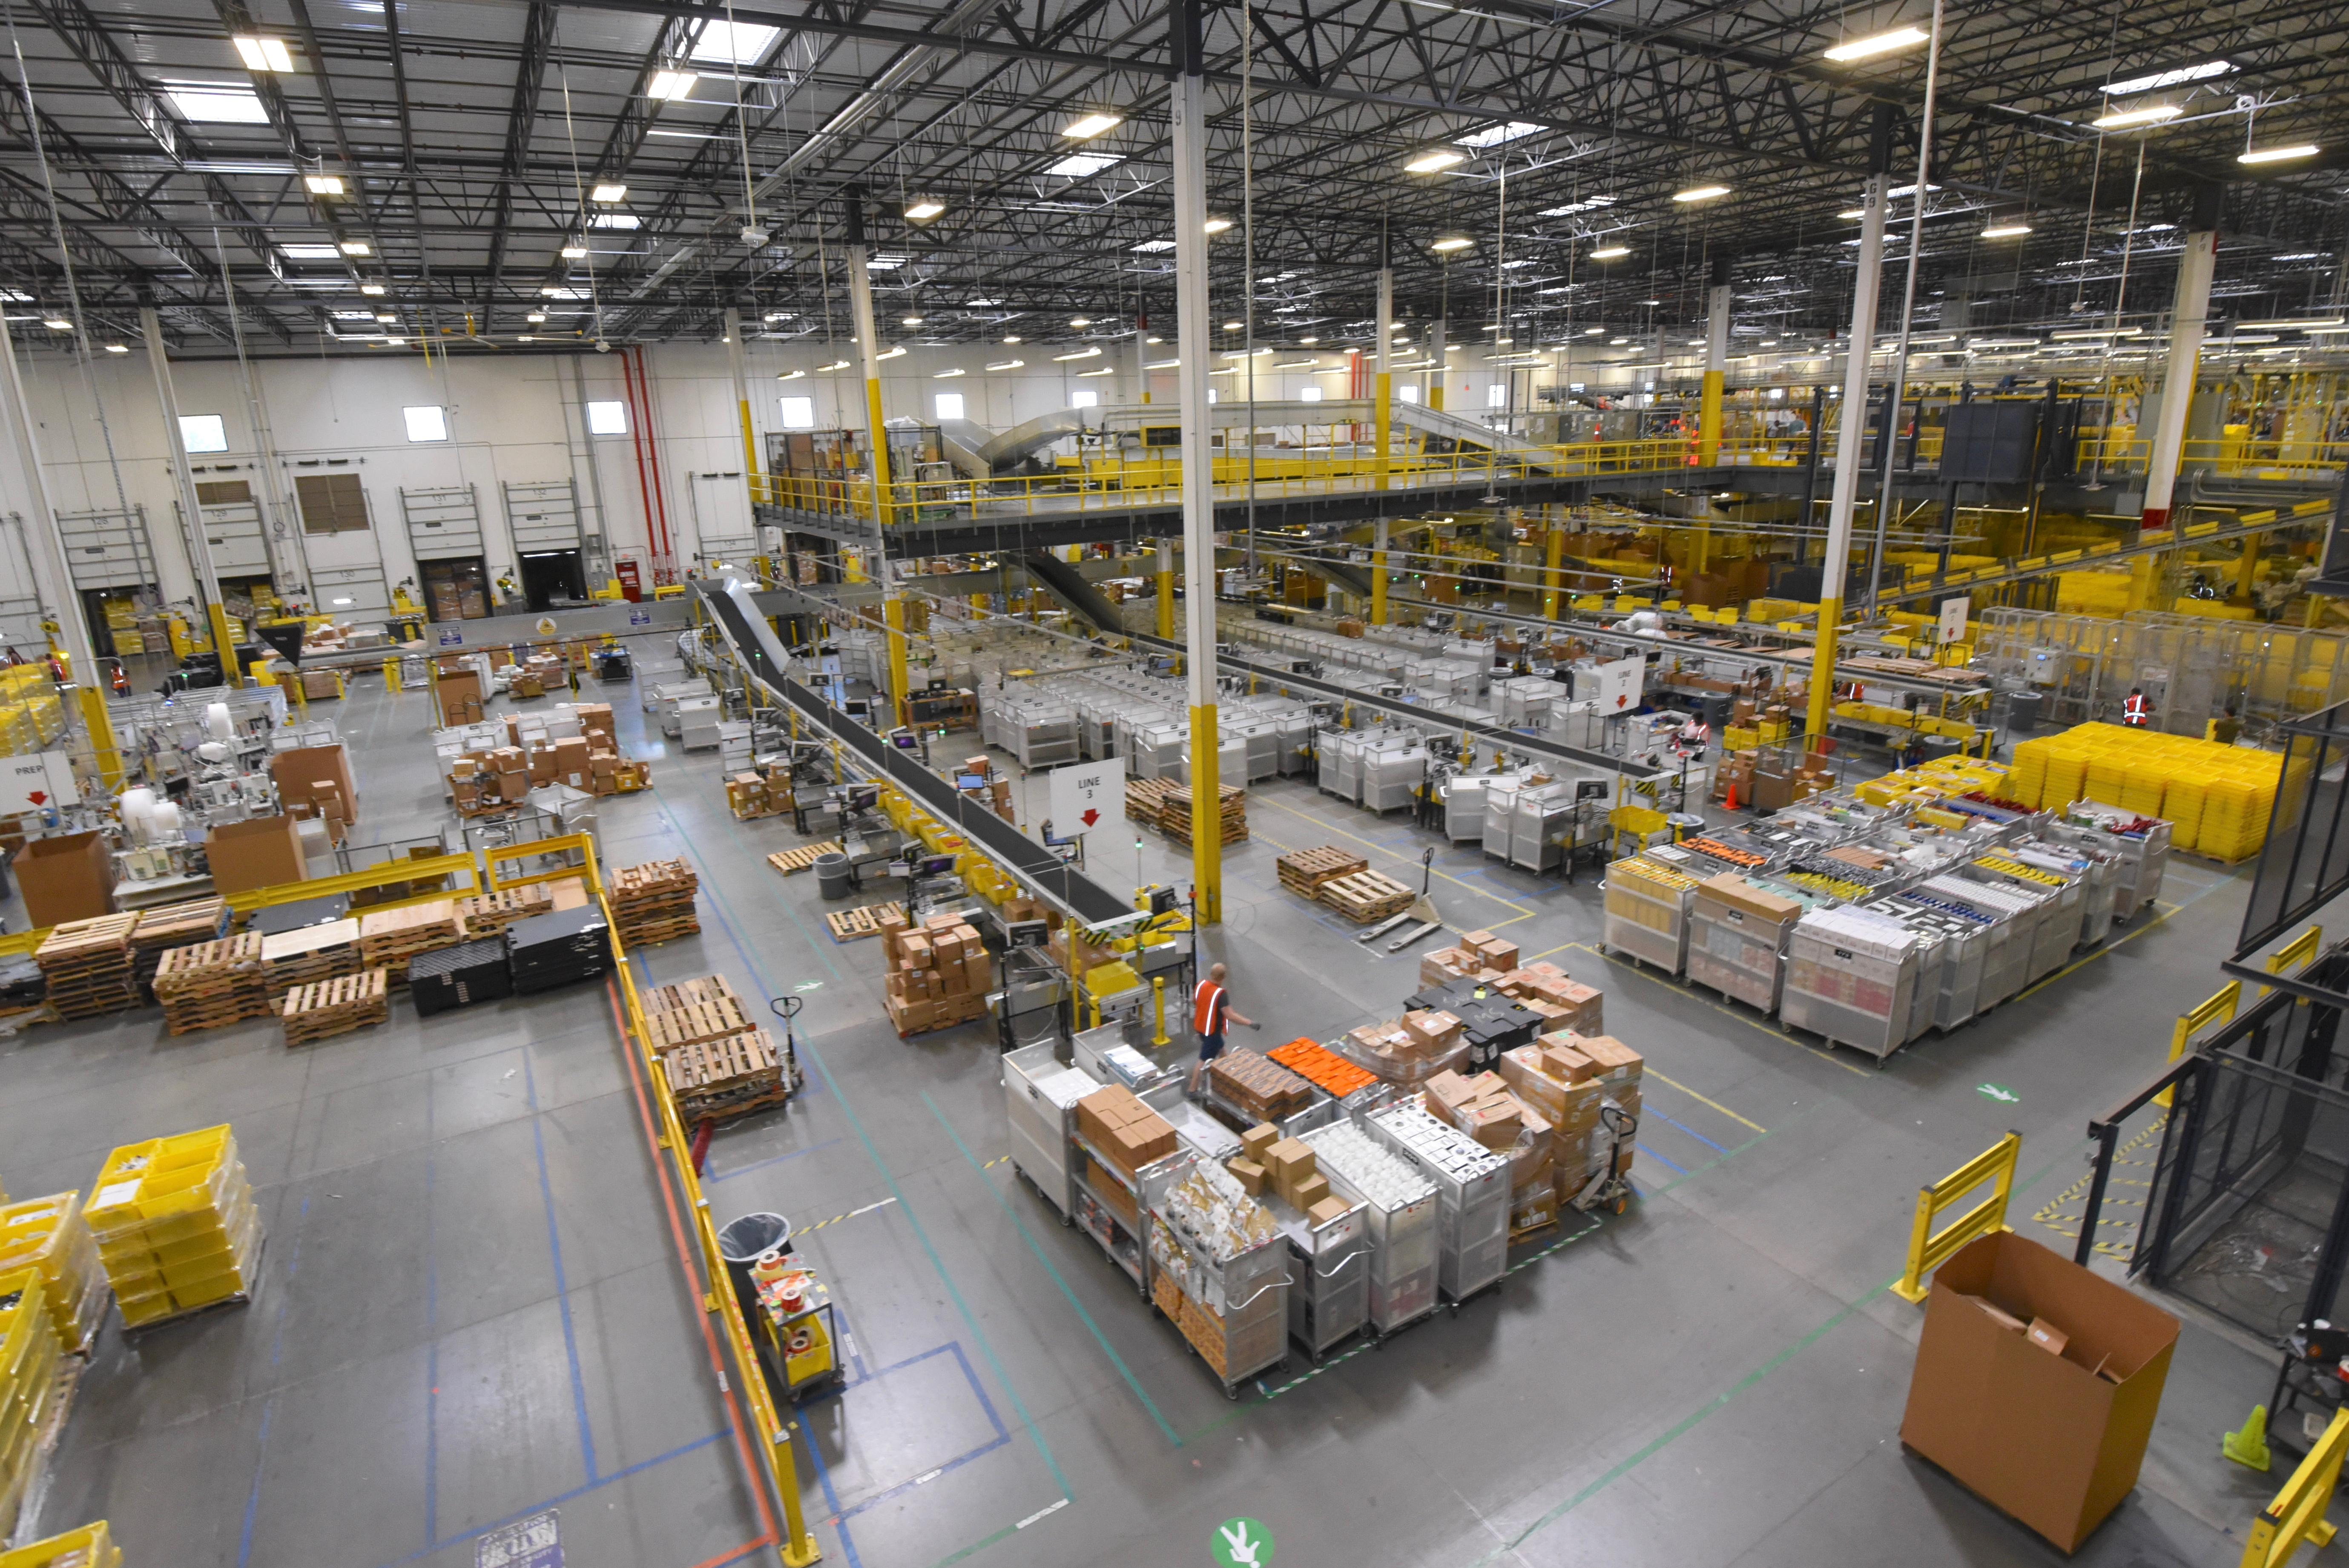 US labor watchdog cites three Amazon facilities for hazardous work conditions